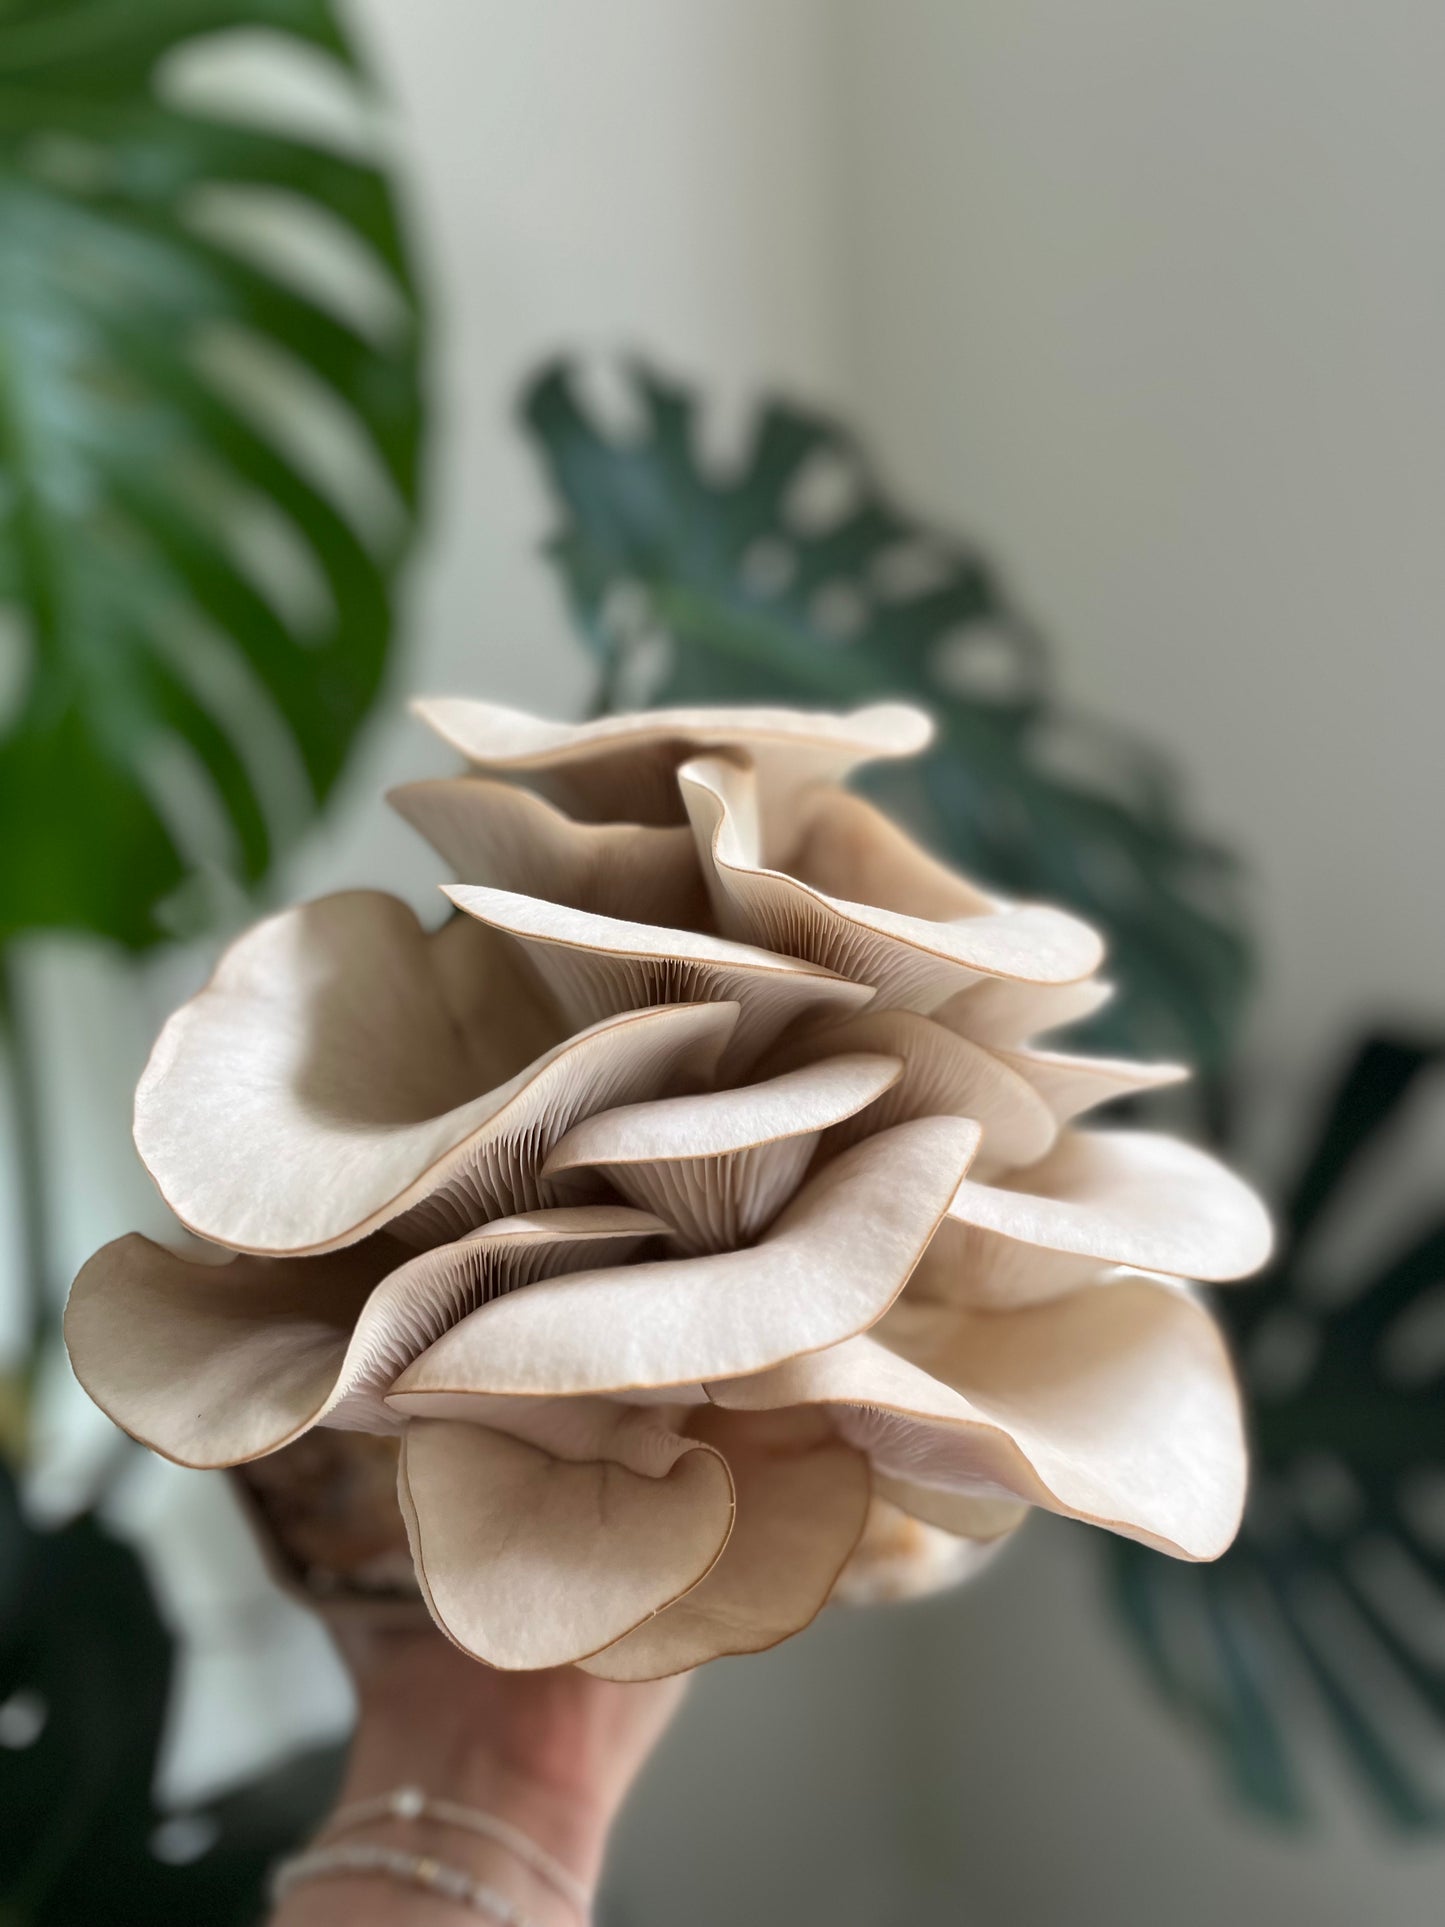 Tree Oyster Mushroom Grow Block